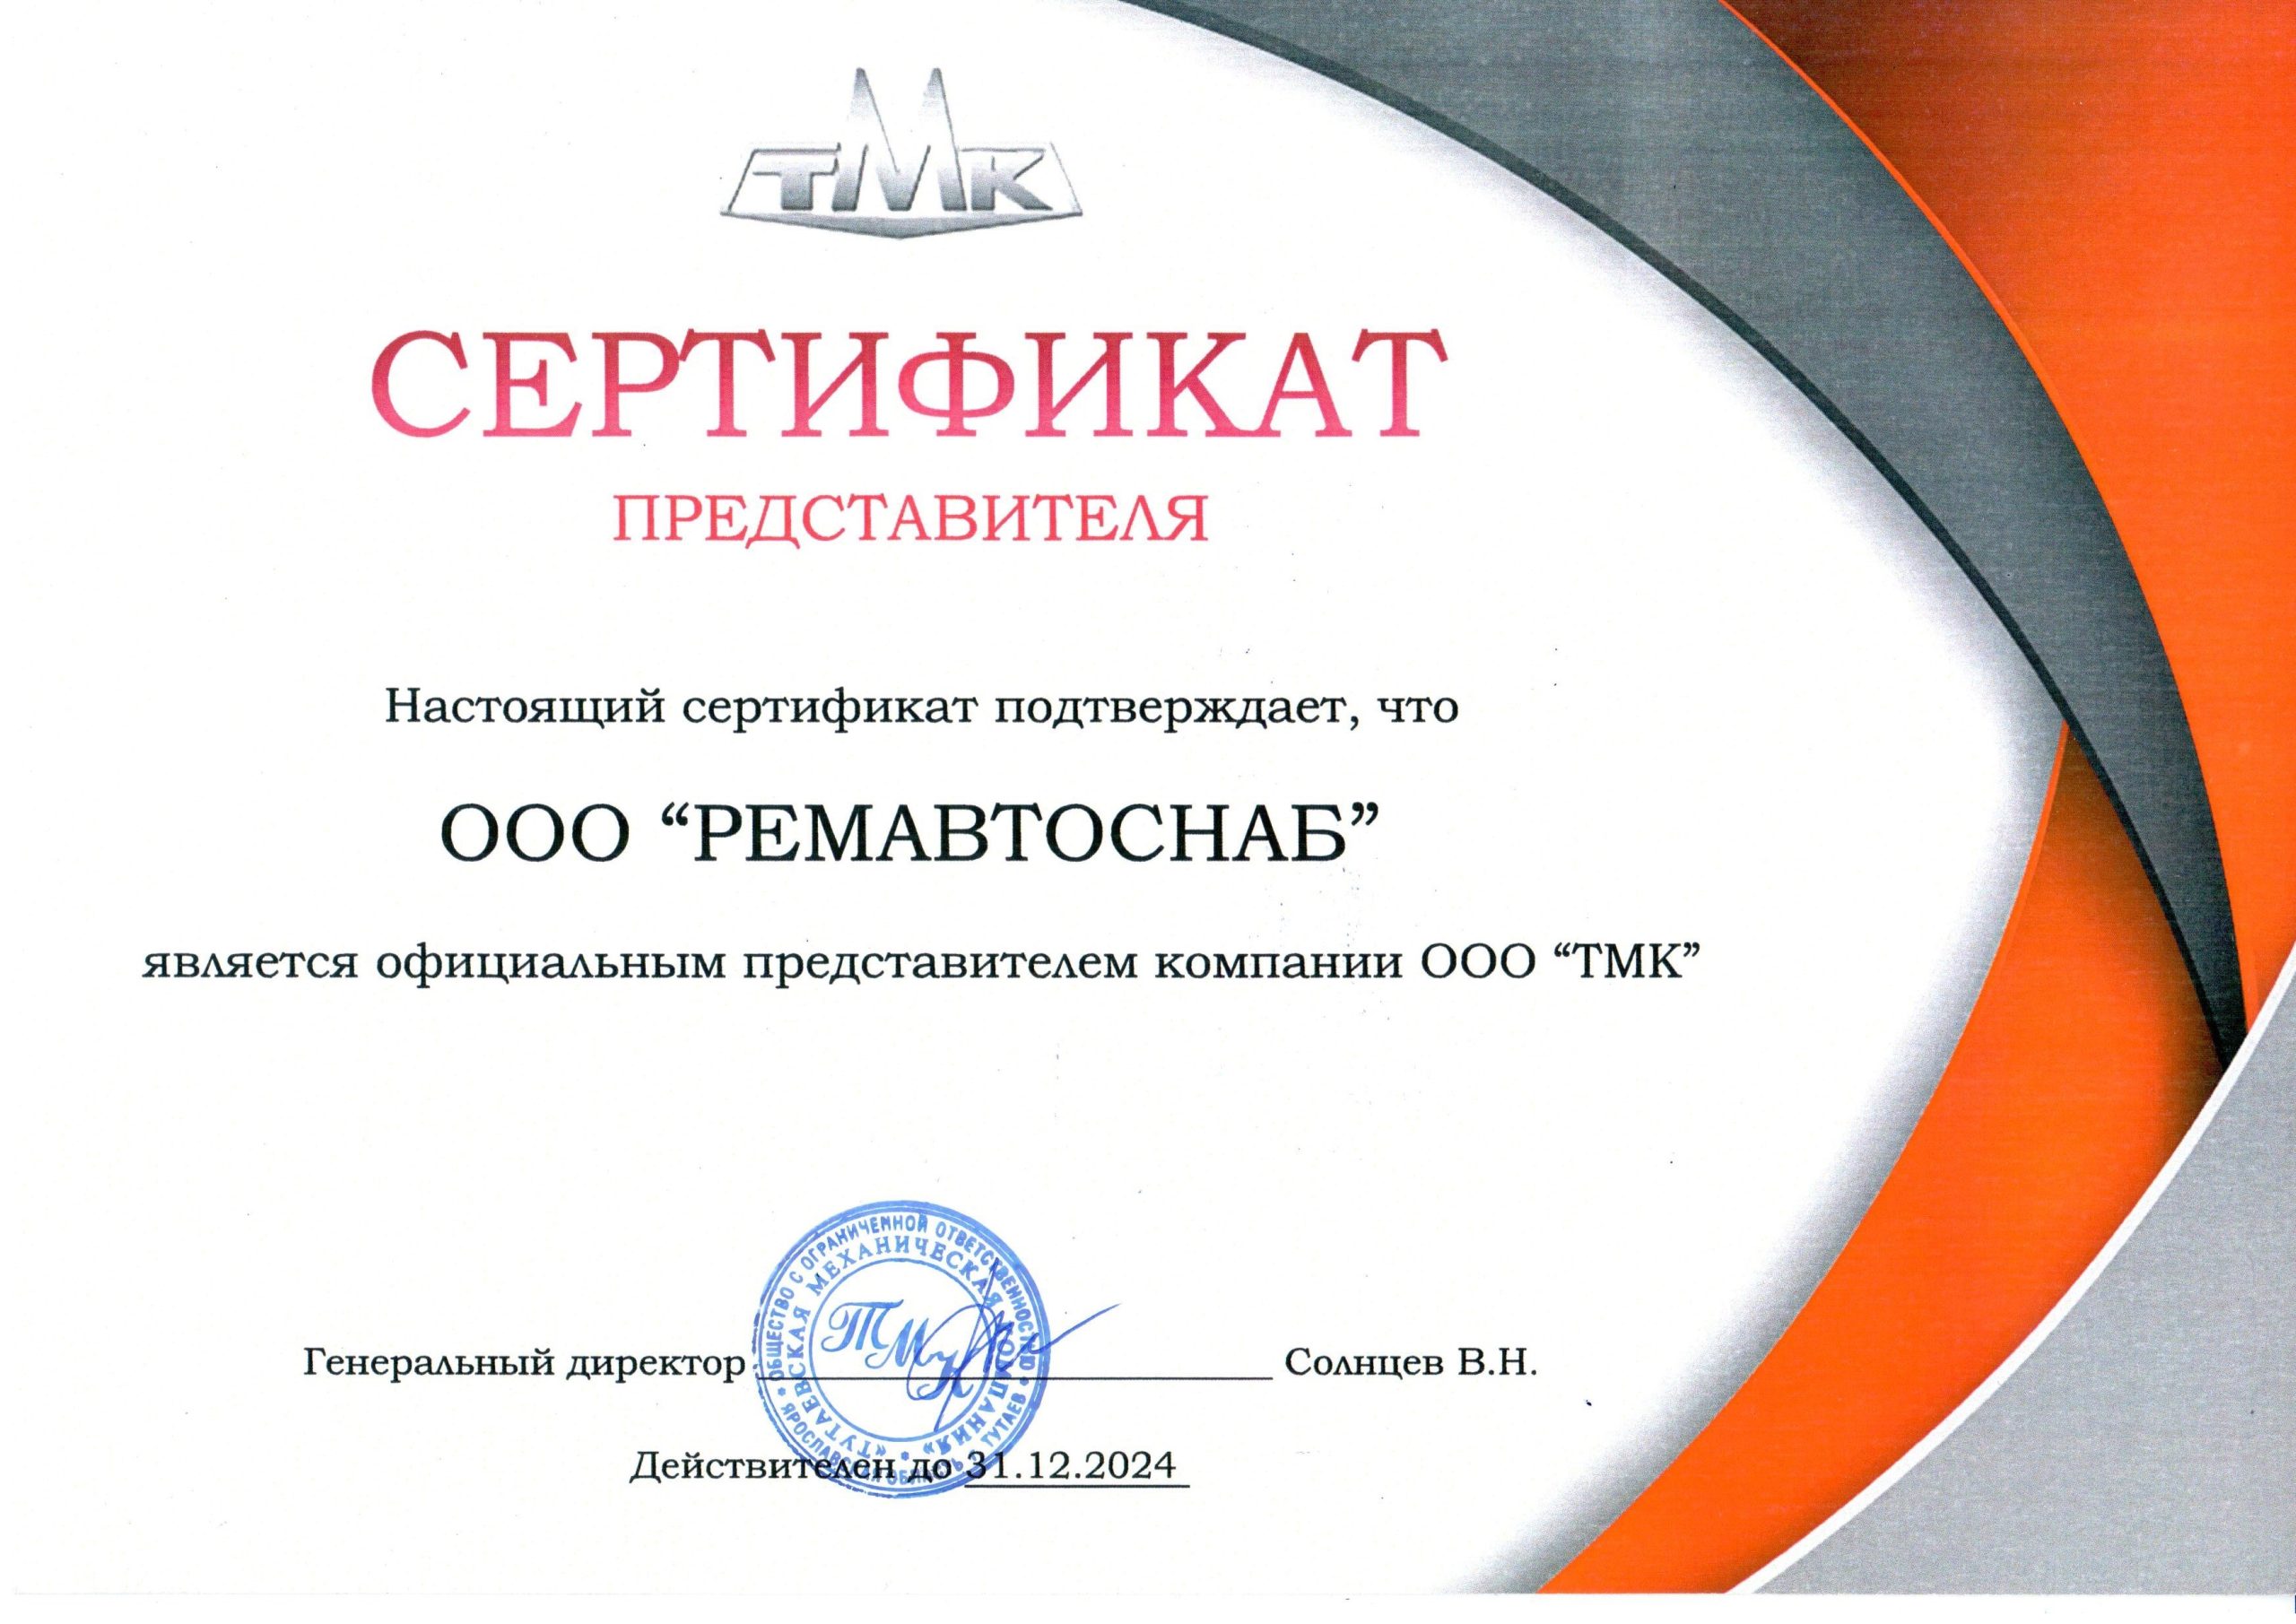 Сертификат представителя ООО ТМК